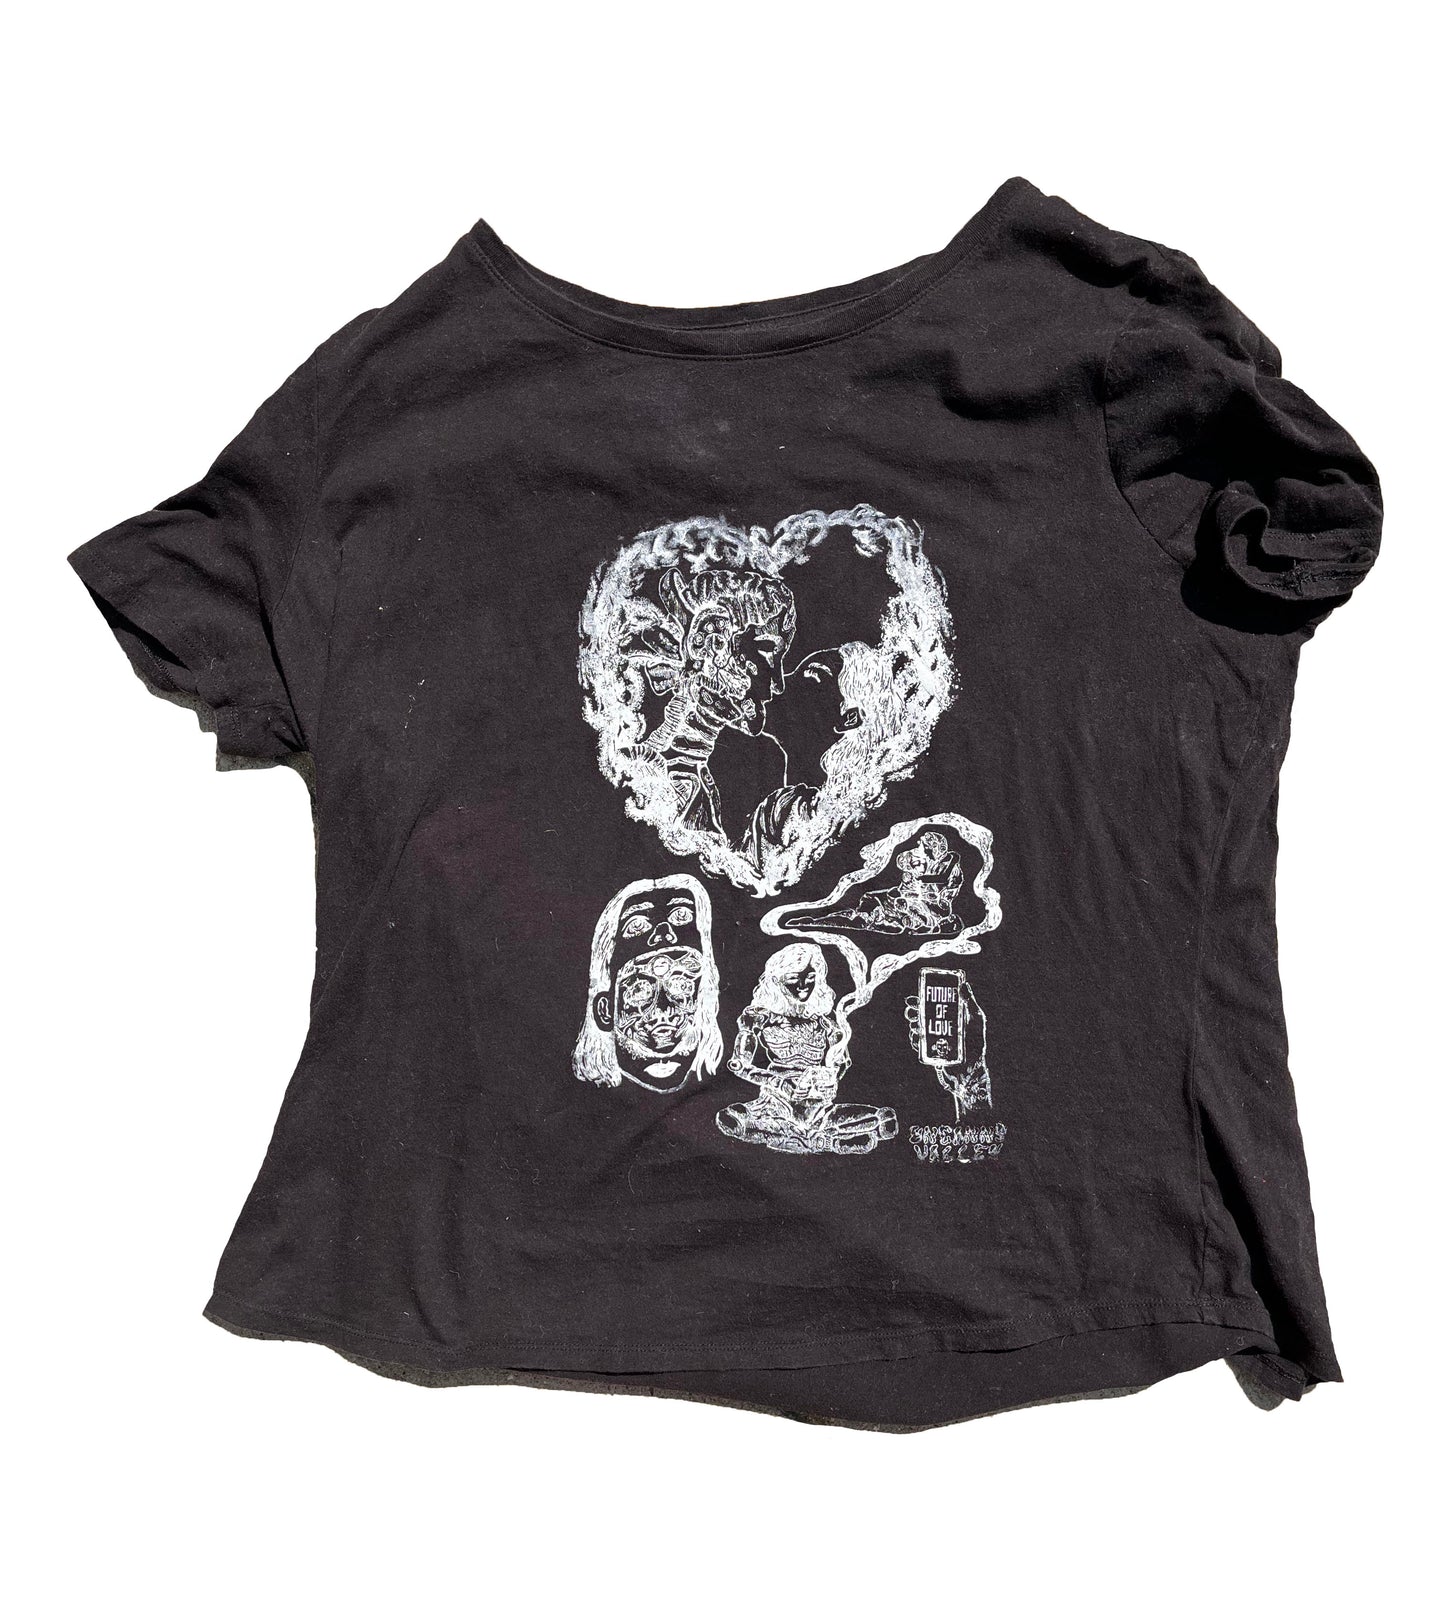 Future of Love 3x black short sleeve graphic tee shirt